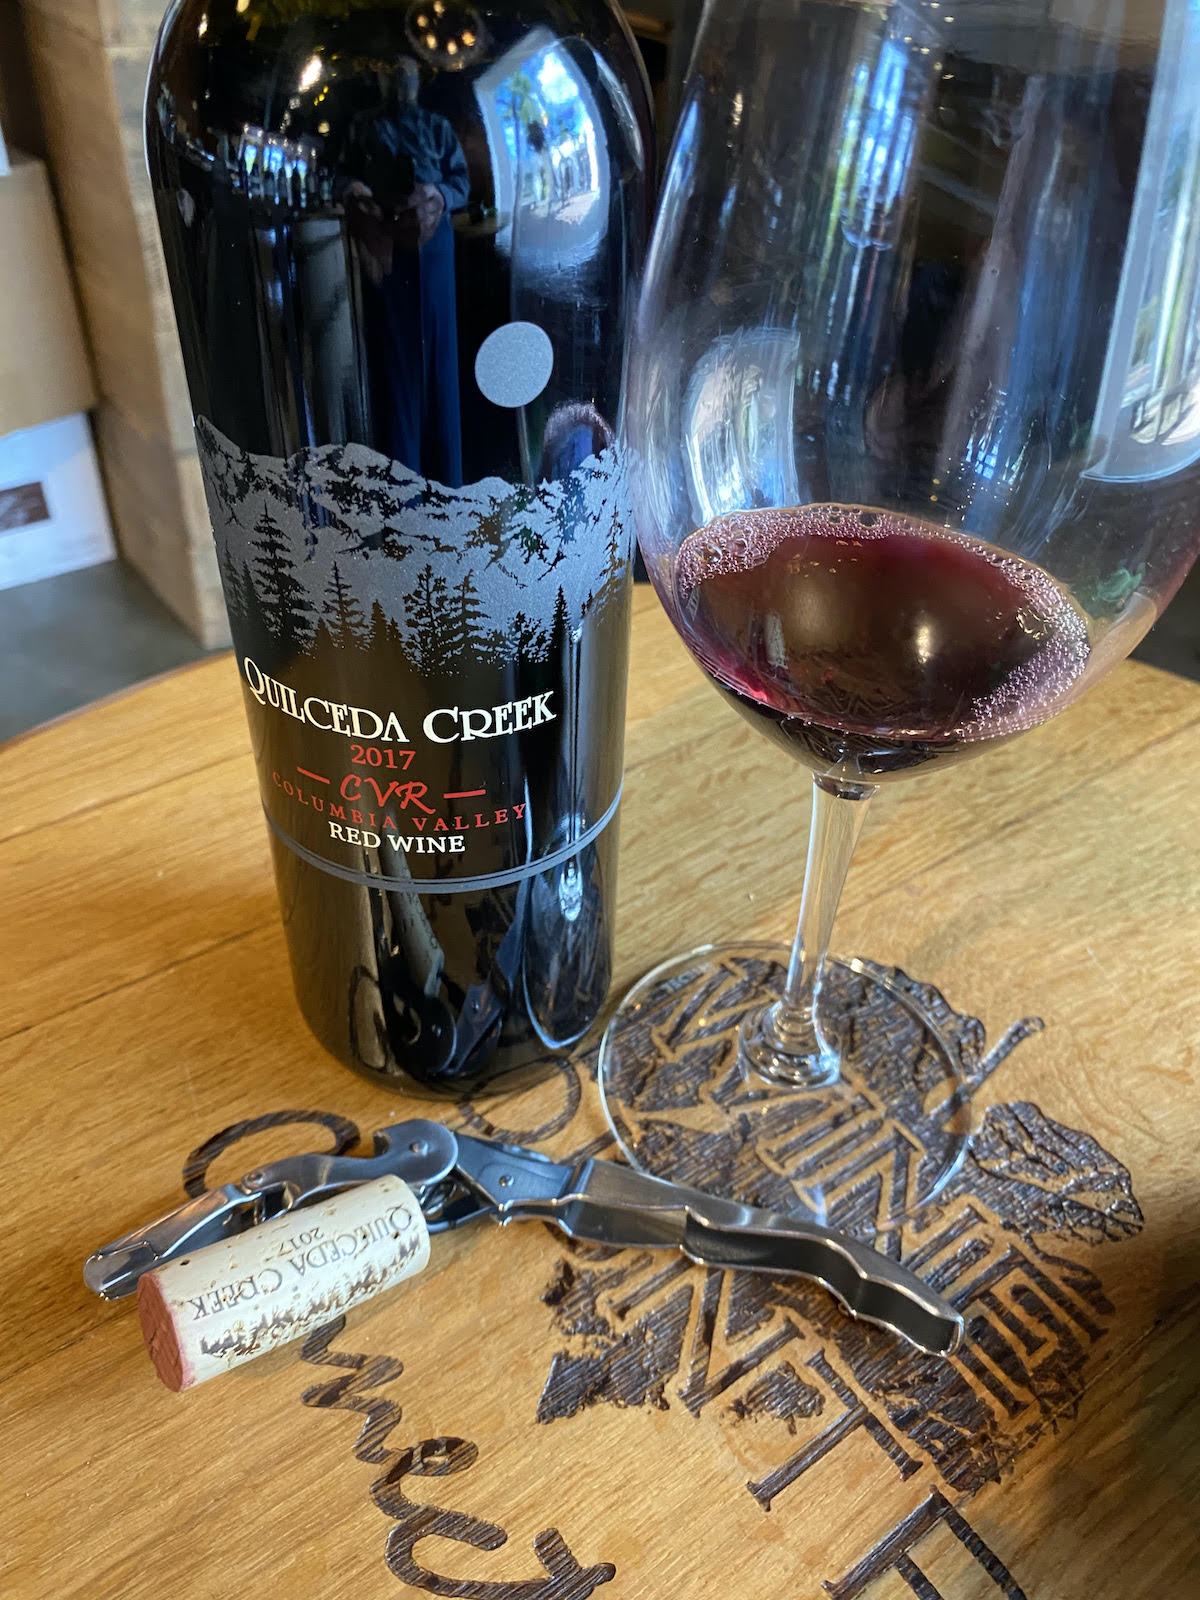 alt="Quilceda Creek 2017 CVR Red Wine bottle and glass"